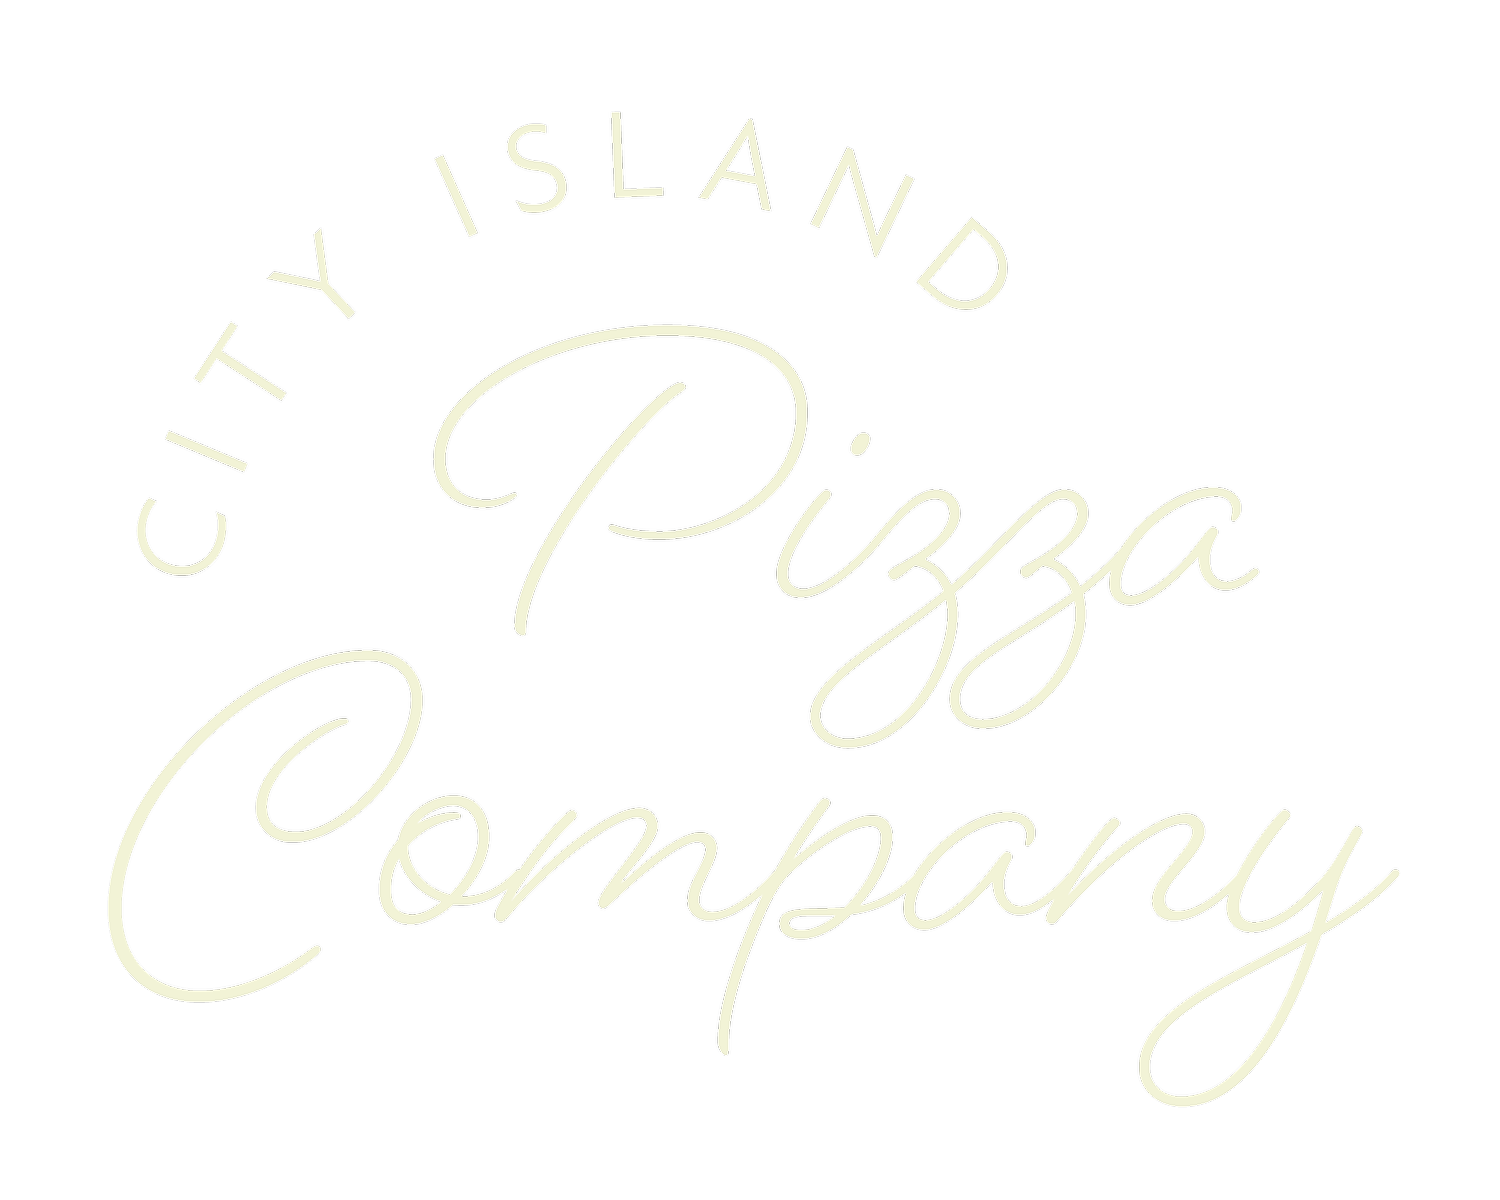 City Island Pizza Co.